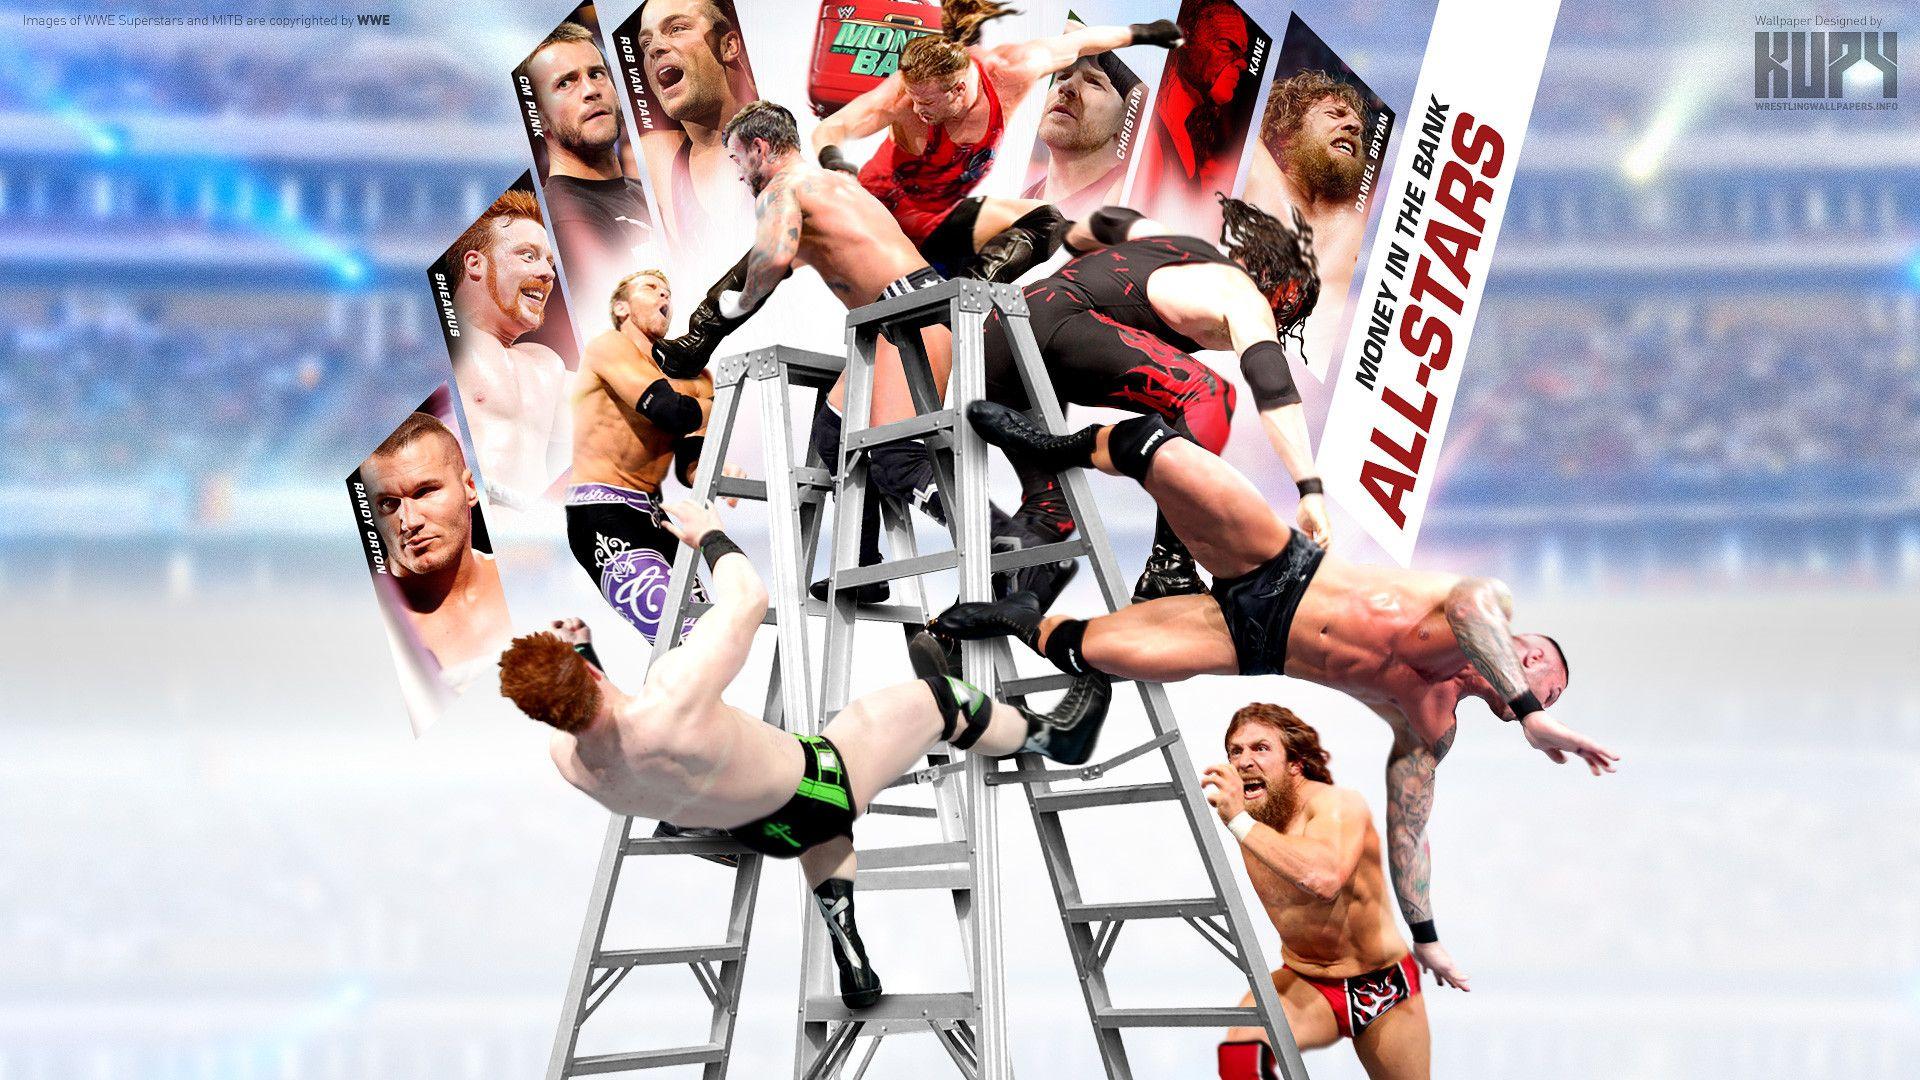 WWE Superstars 2018 Wallpaper (the best image in 2018)